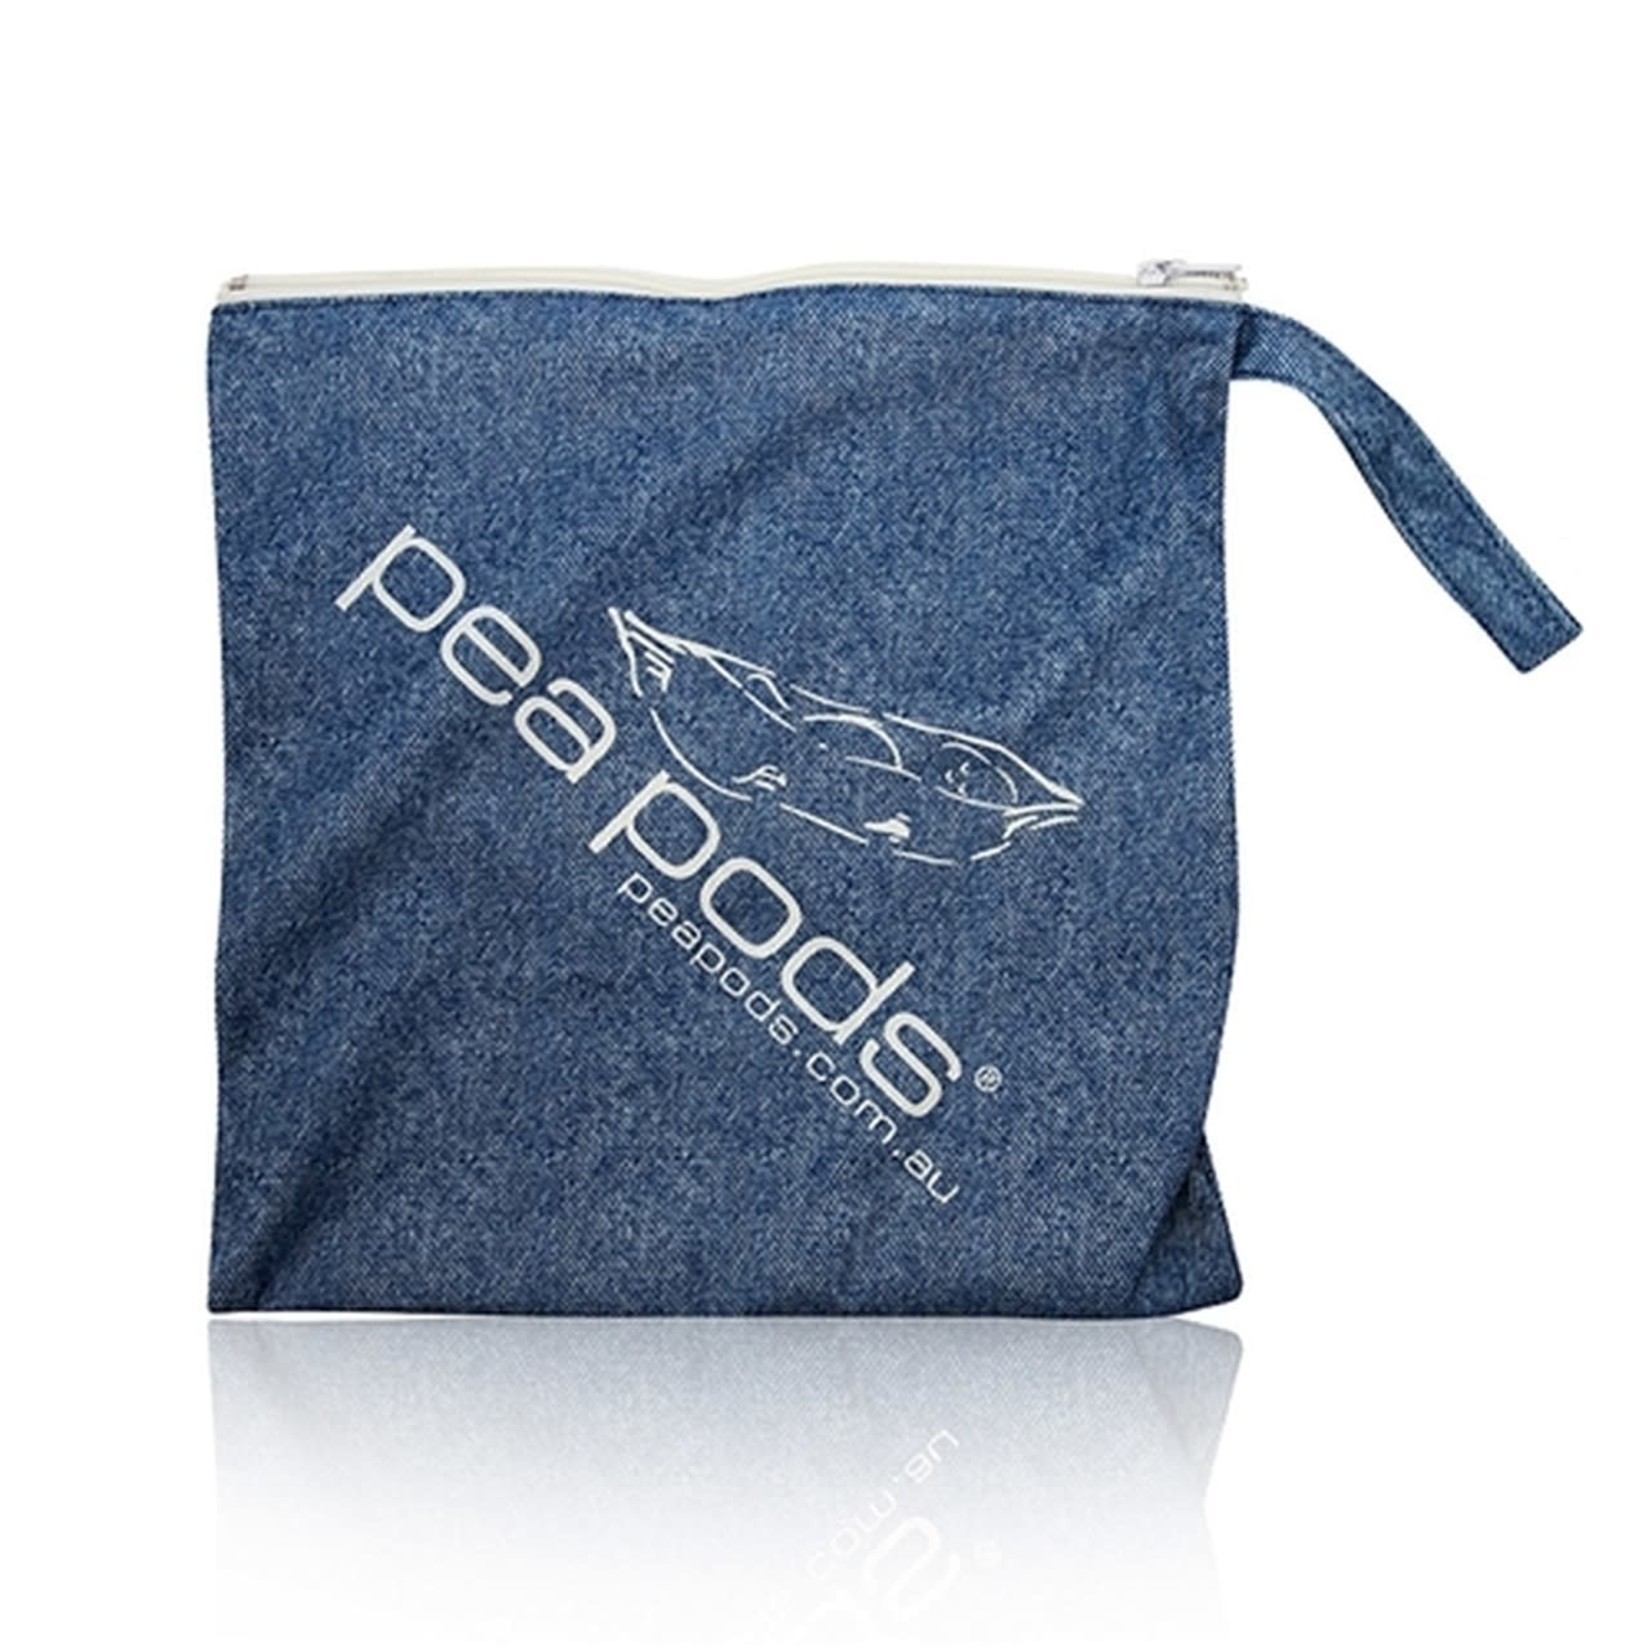 Pea Pods Pea Pods Wet Bag - Travel Size - Denim Print